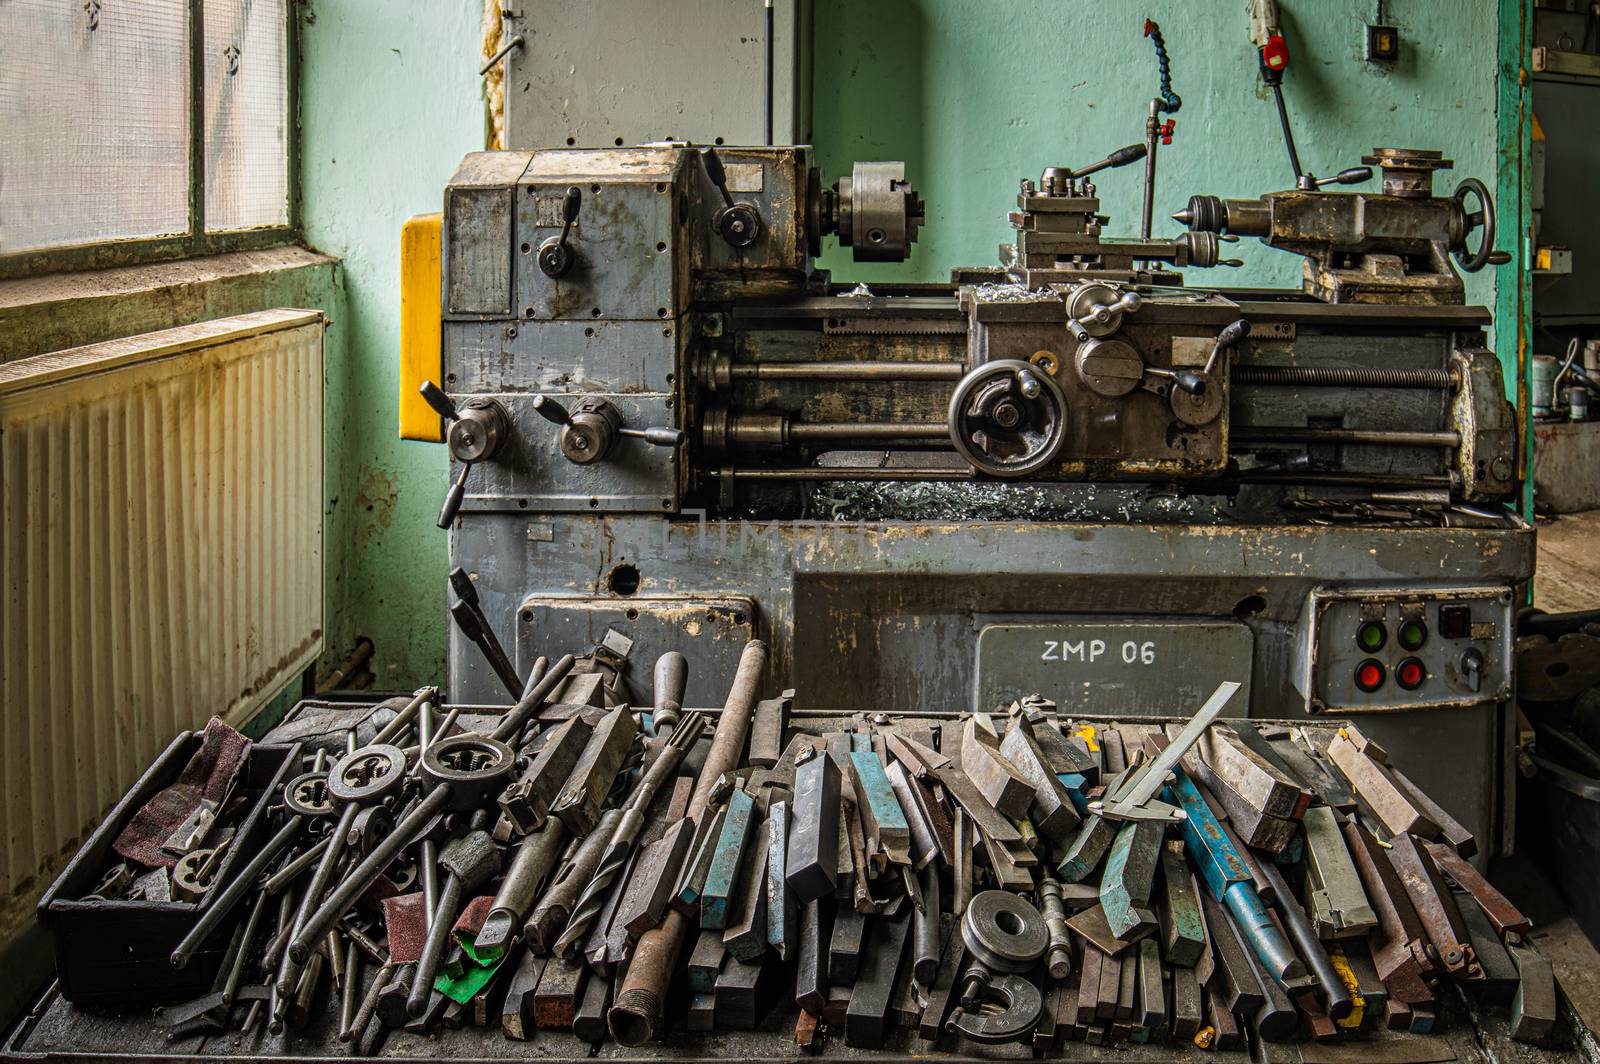 shot in abandoned ironworks workshop in Poland